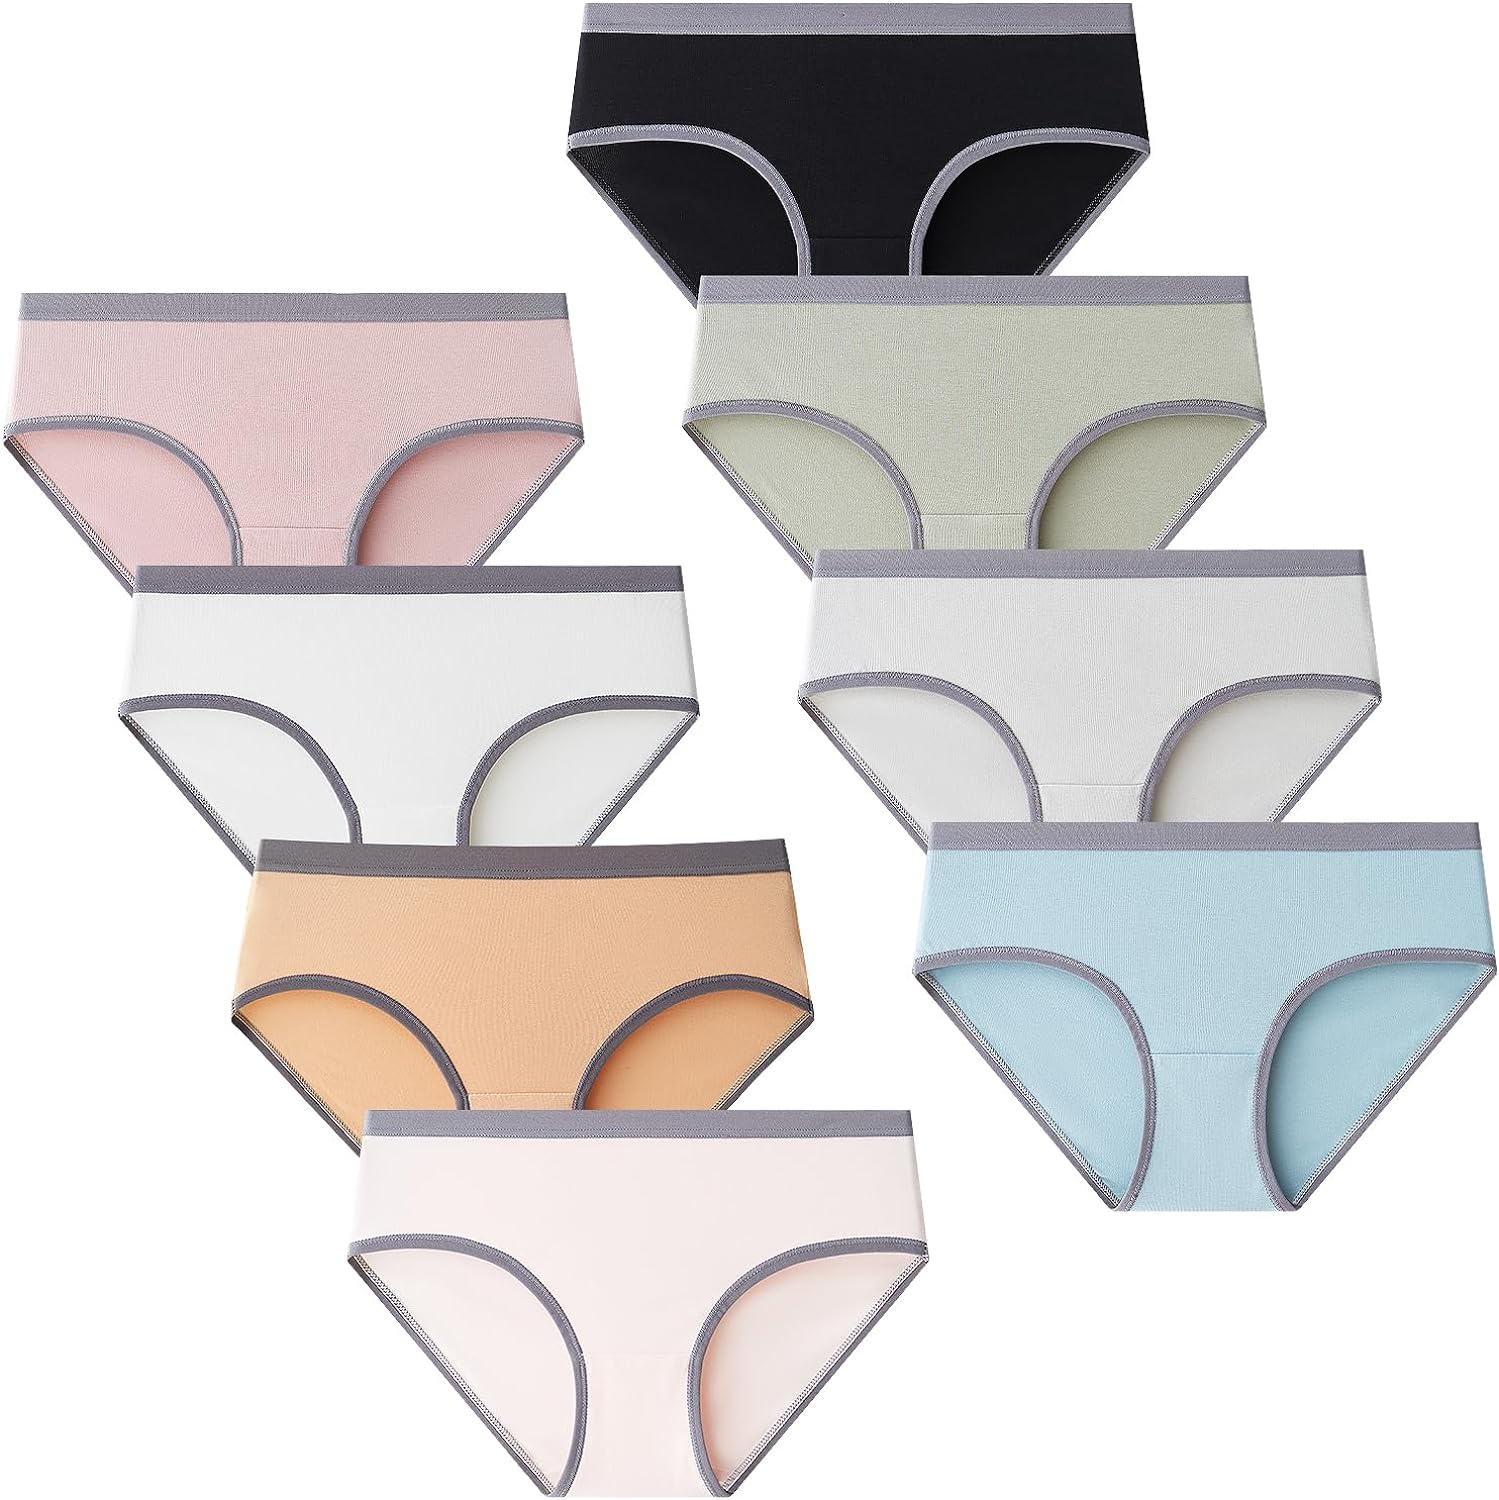 Domee Teen Girls Cotton Underwear Panties Briefs Pack of 8